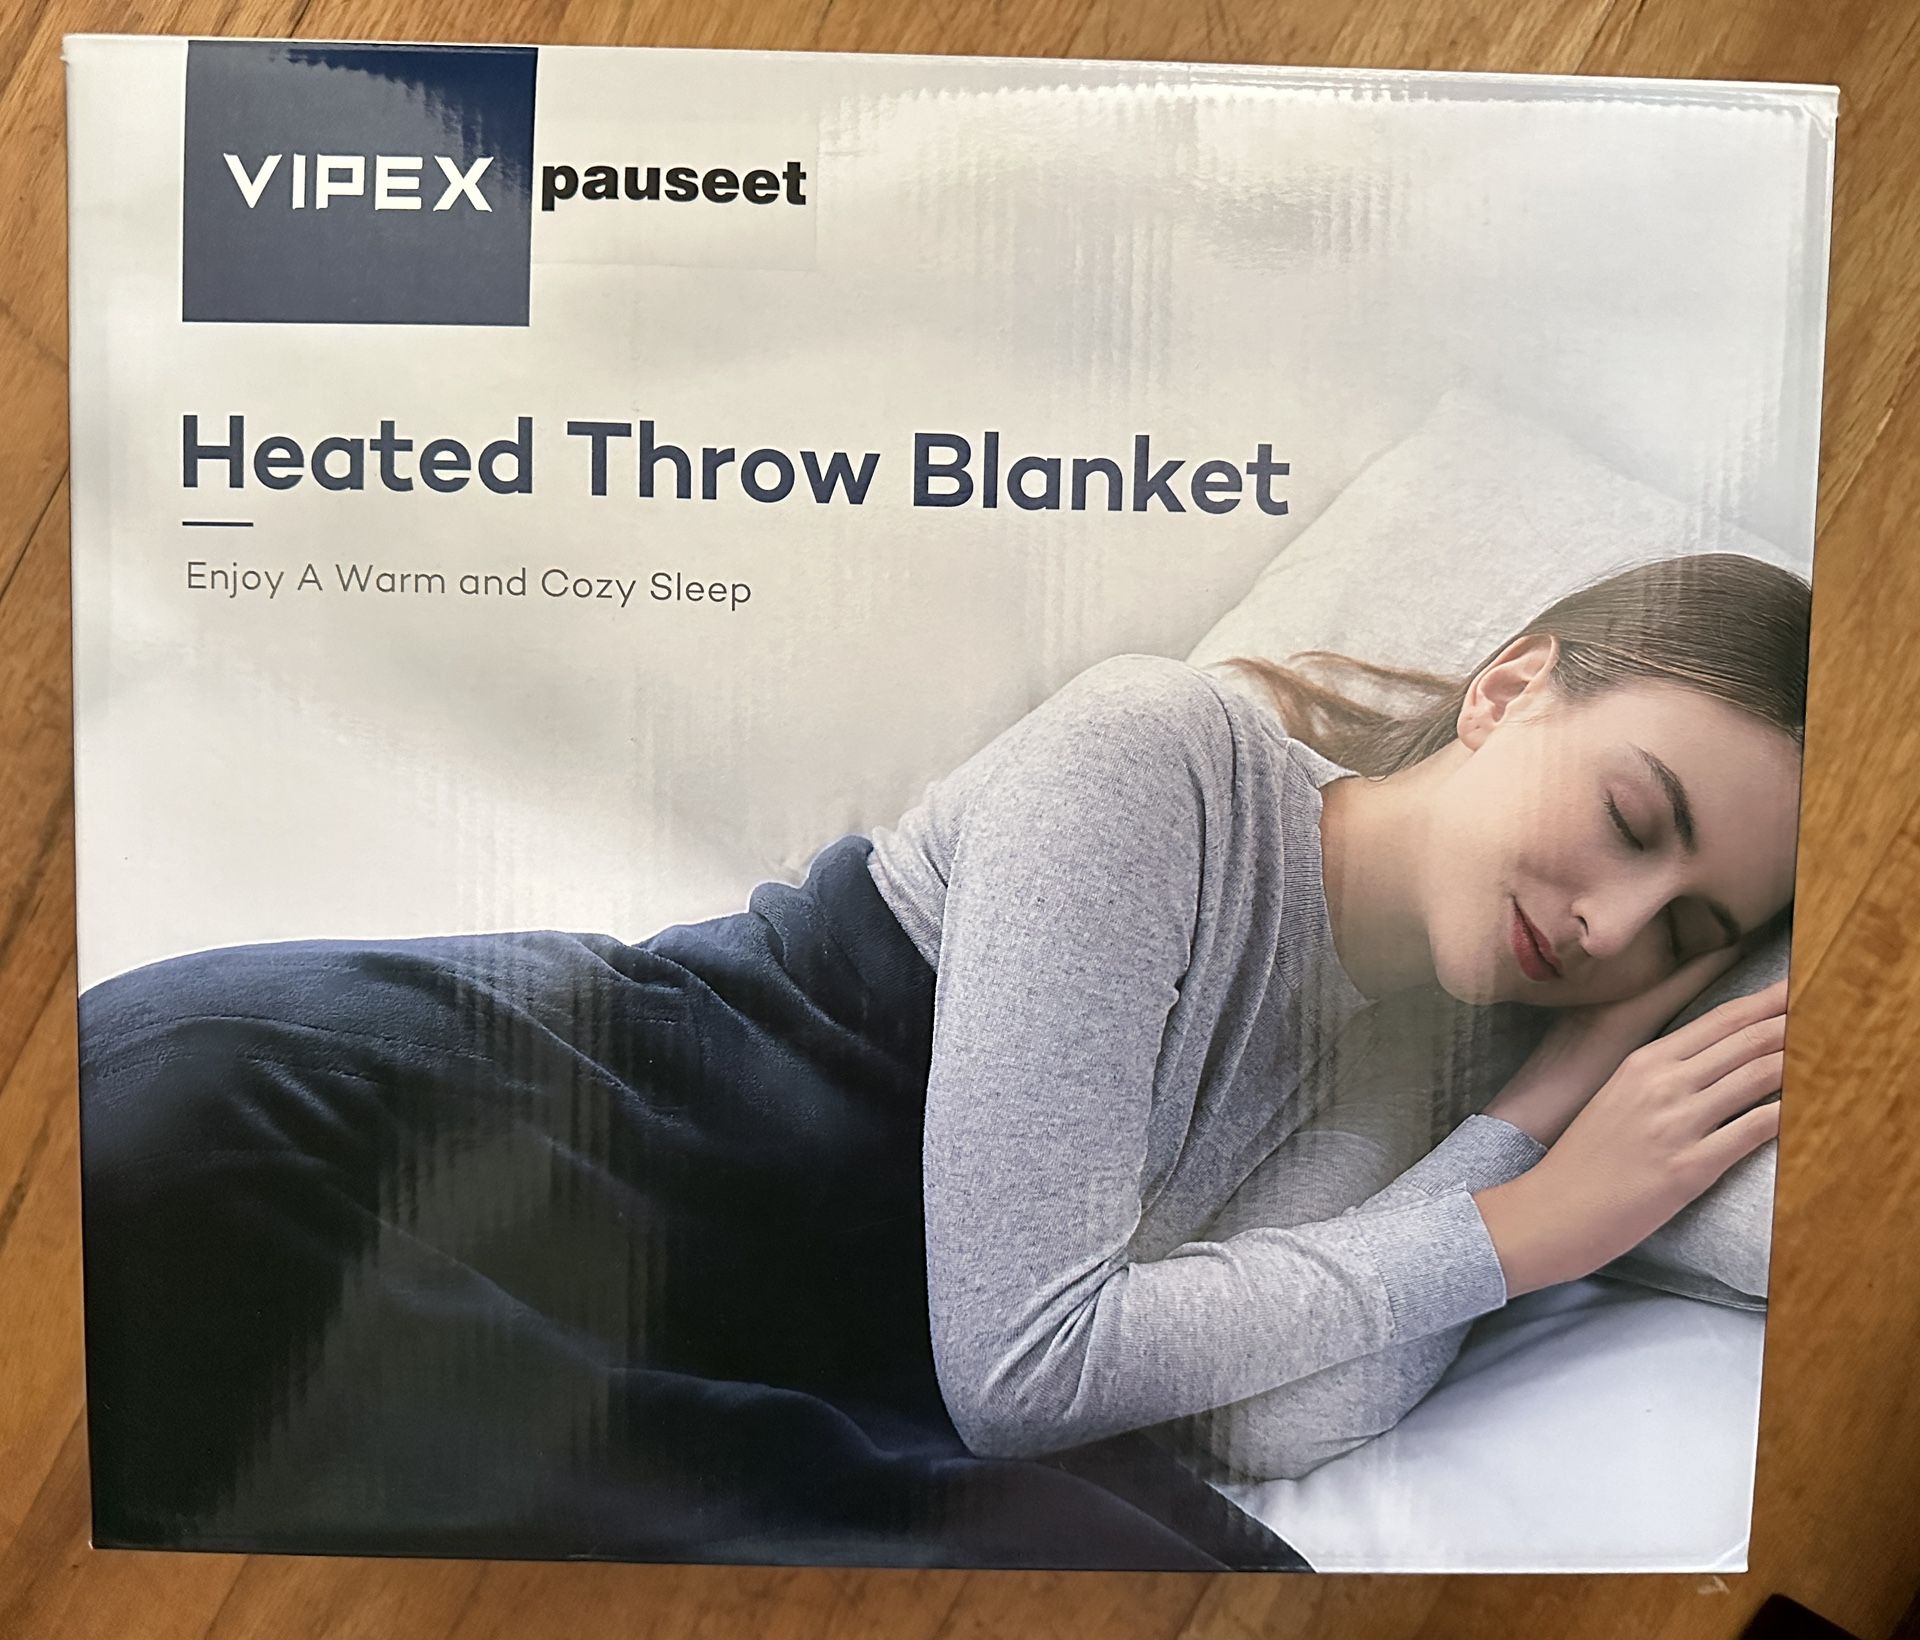 NIB Blue VIPEX Electric Heated Throw Blanket 50in x 60in 